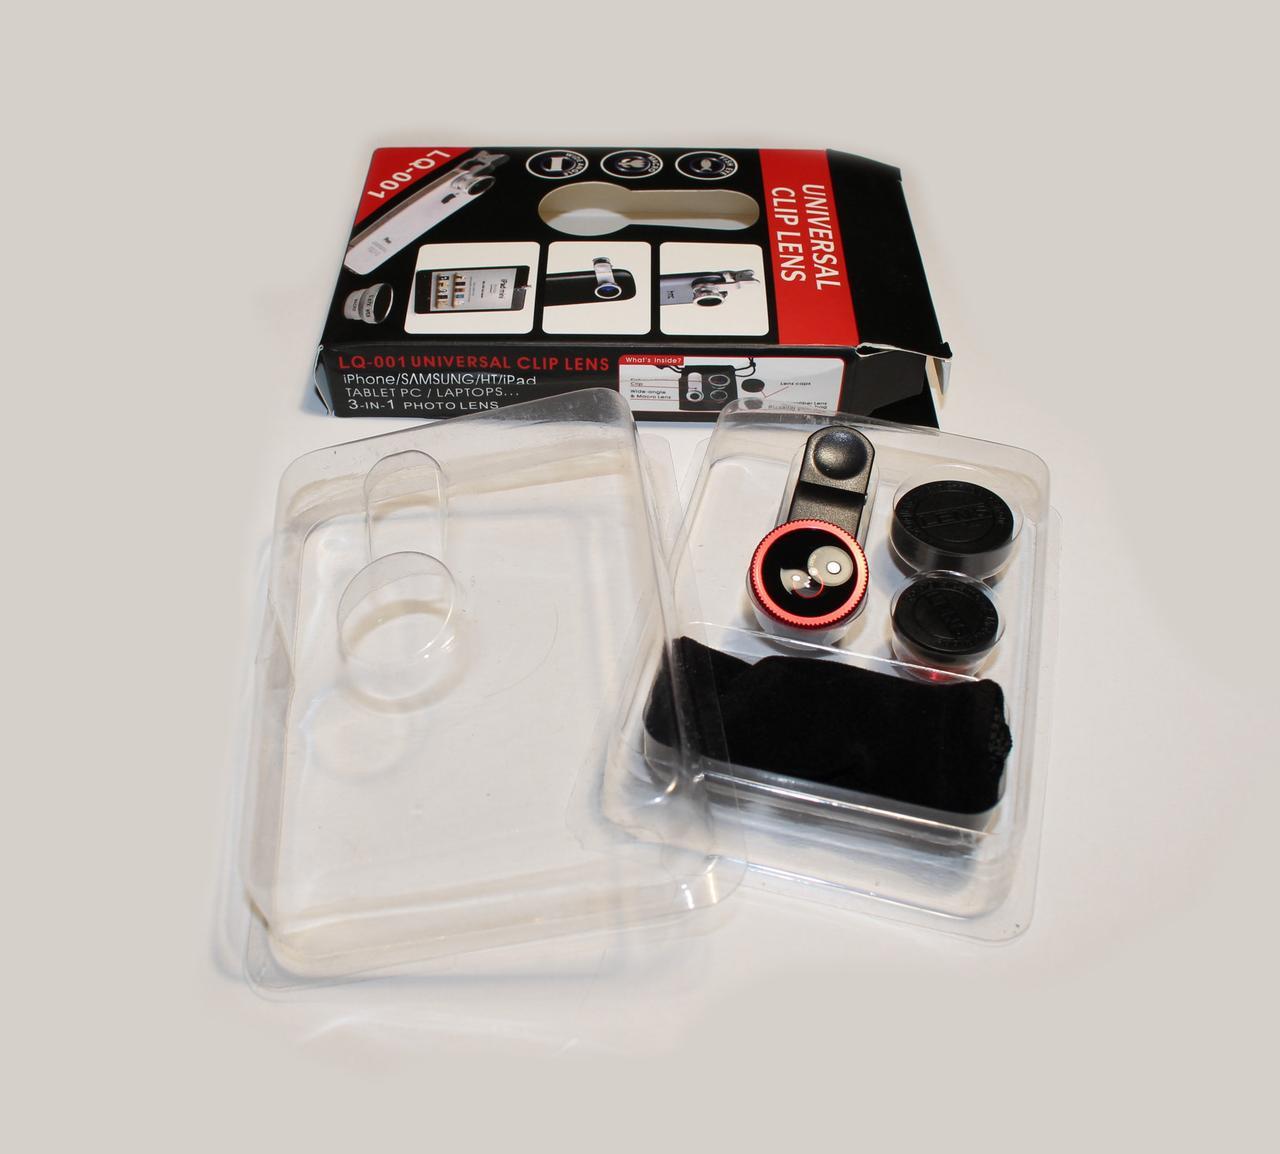 Лінзи для телефону (об'єктиви) 3 в 1 - FishEye, Super Wide, макро Selfie Cam Lens (чорний)